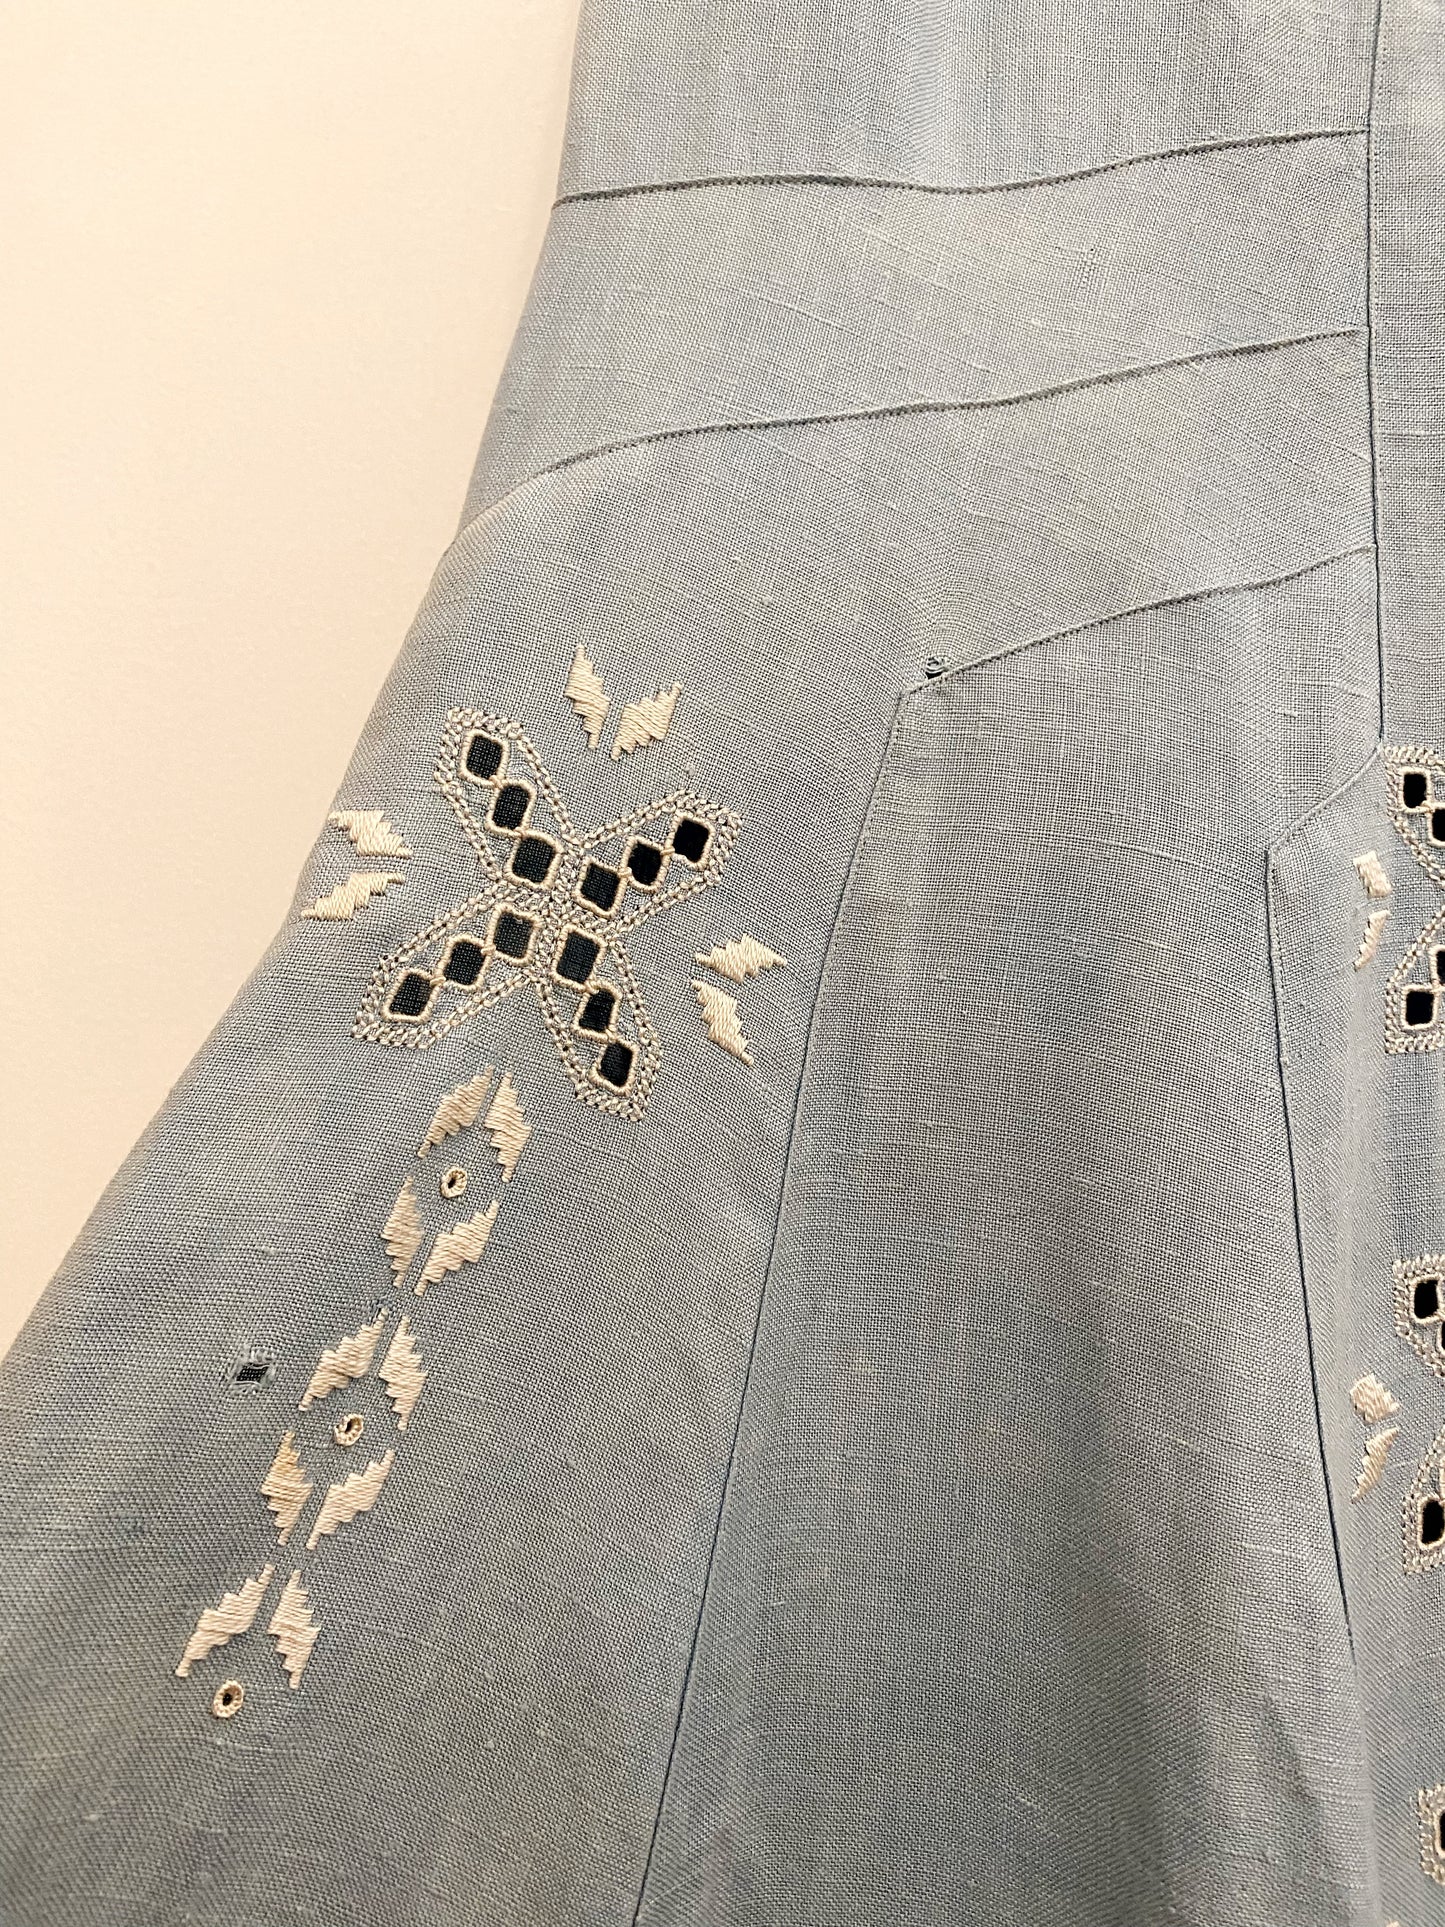 1920s Pale Blue Embroidered Linen Drop Waist Dress- M/L